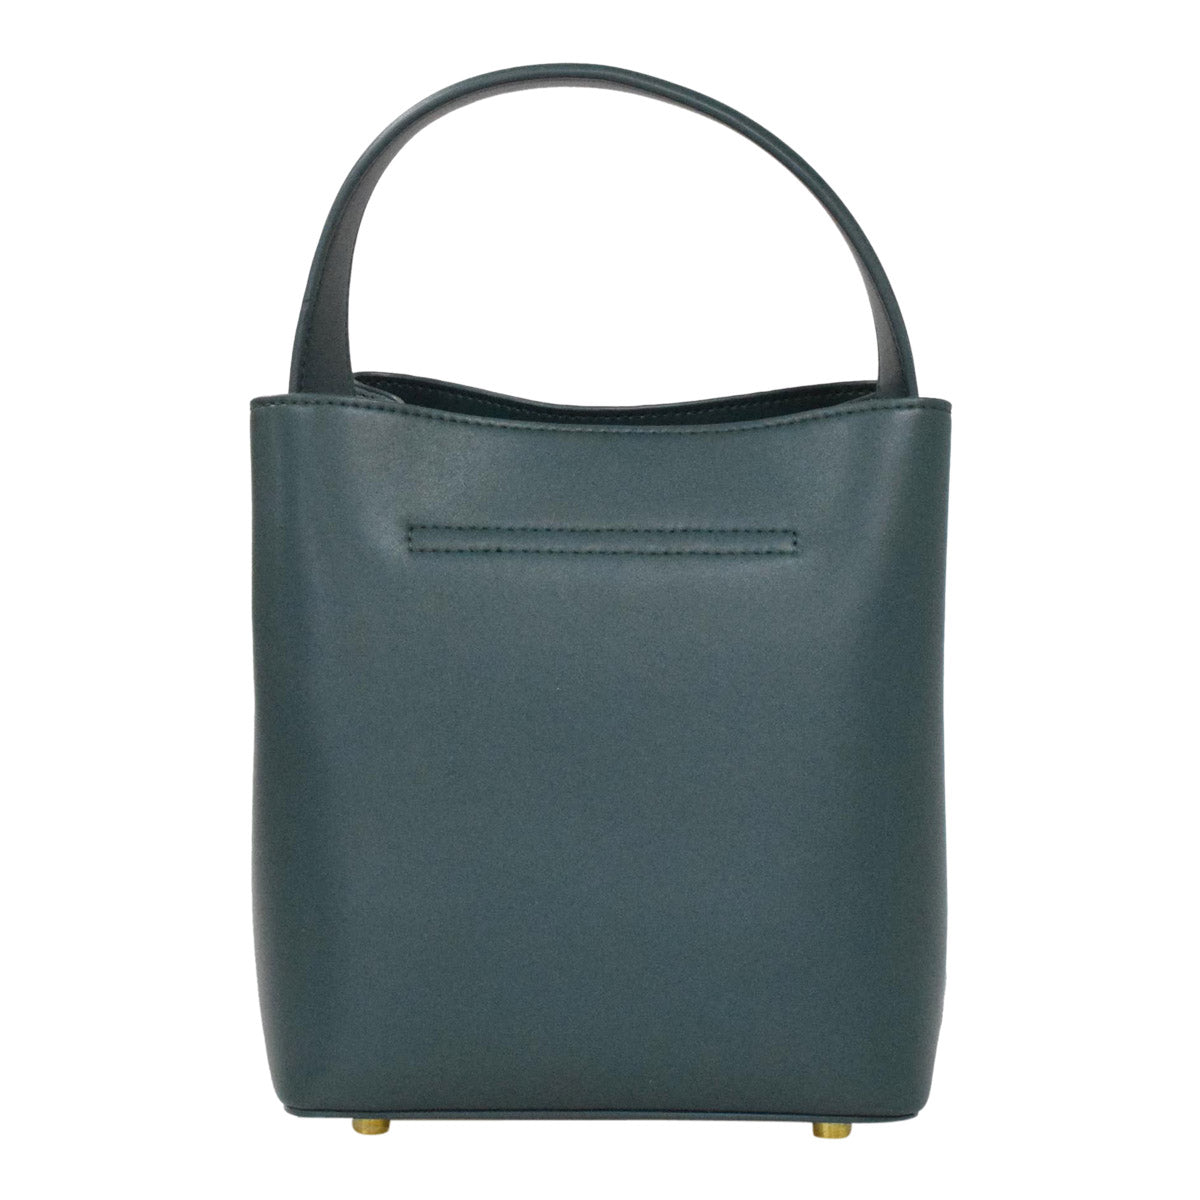 Leather and Suede Handbag with Shoulder Strap